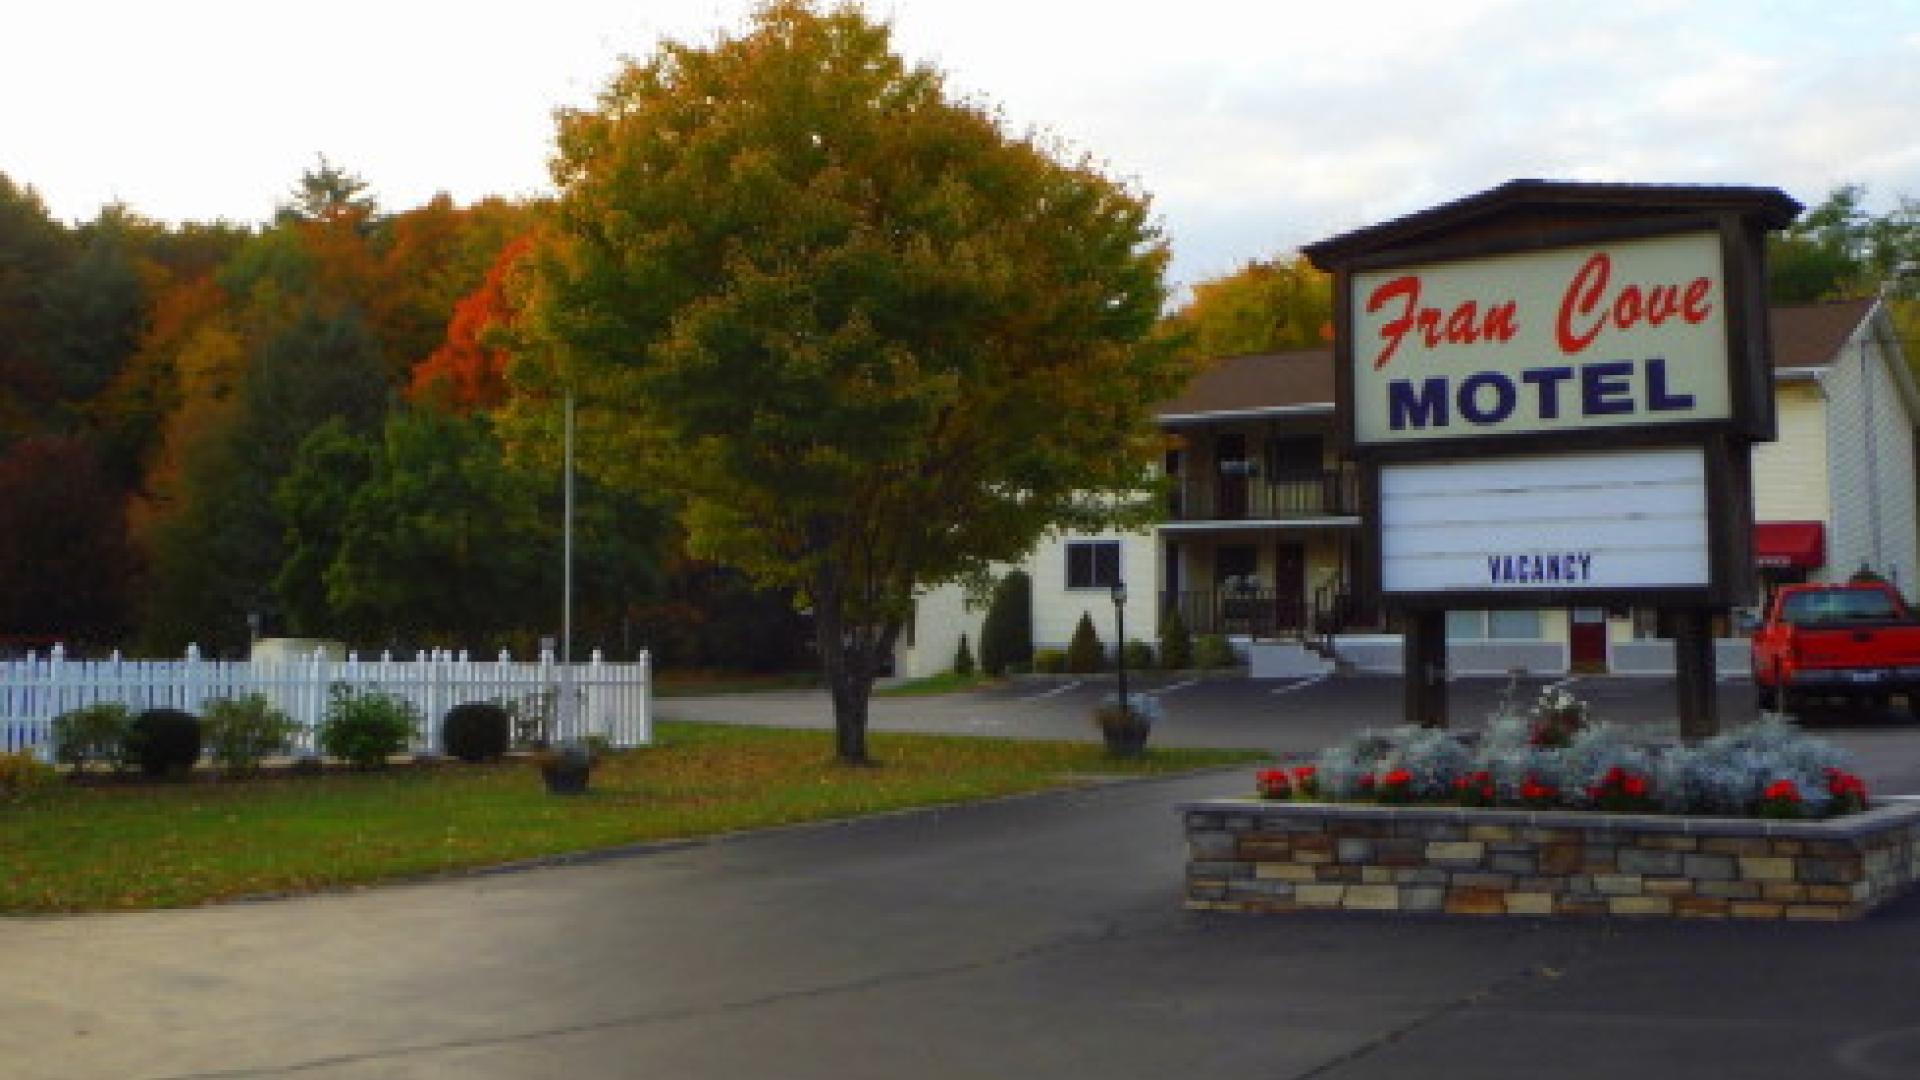 Fran Cove Motel